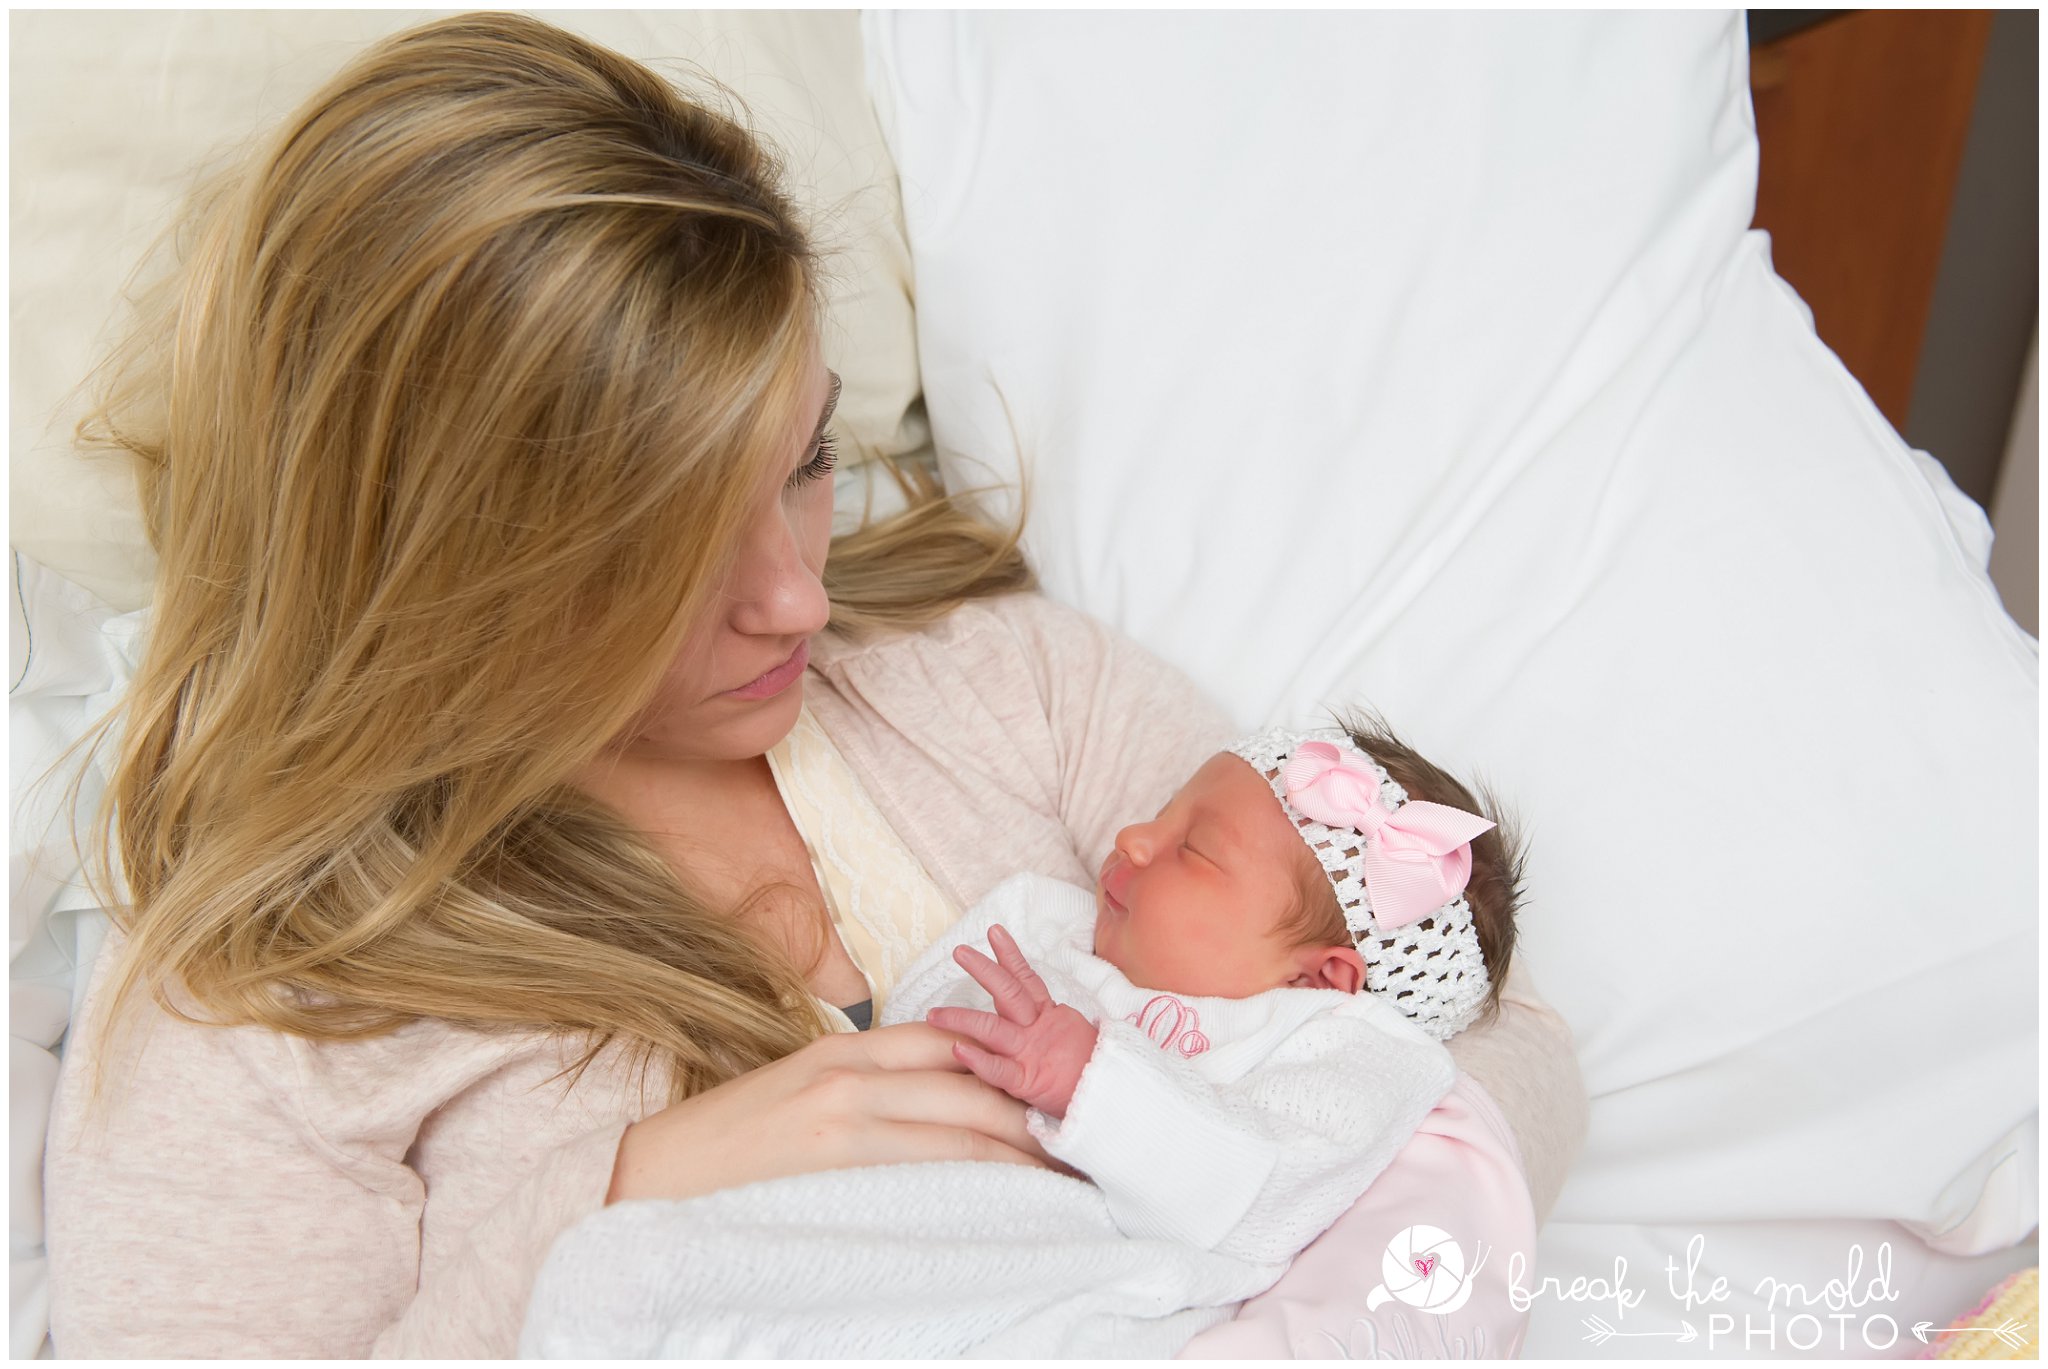 fresh-24-newborn-in-hospital-break-the-mold-photo-baby-girl-sweet-in-room-photos (42).jpg